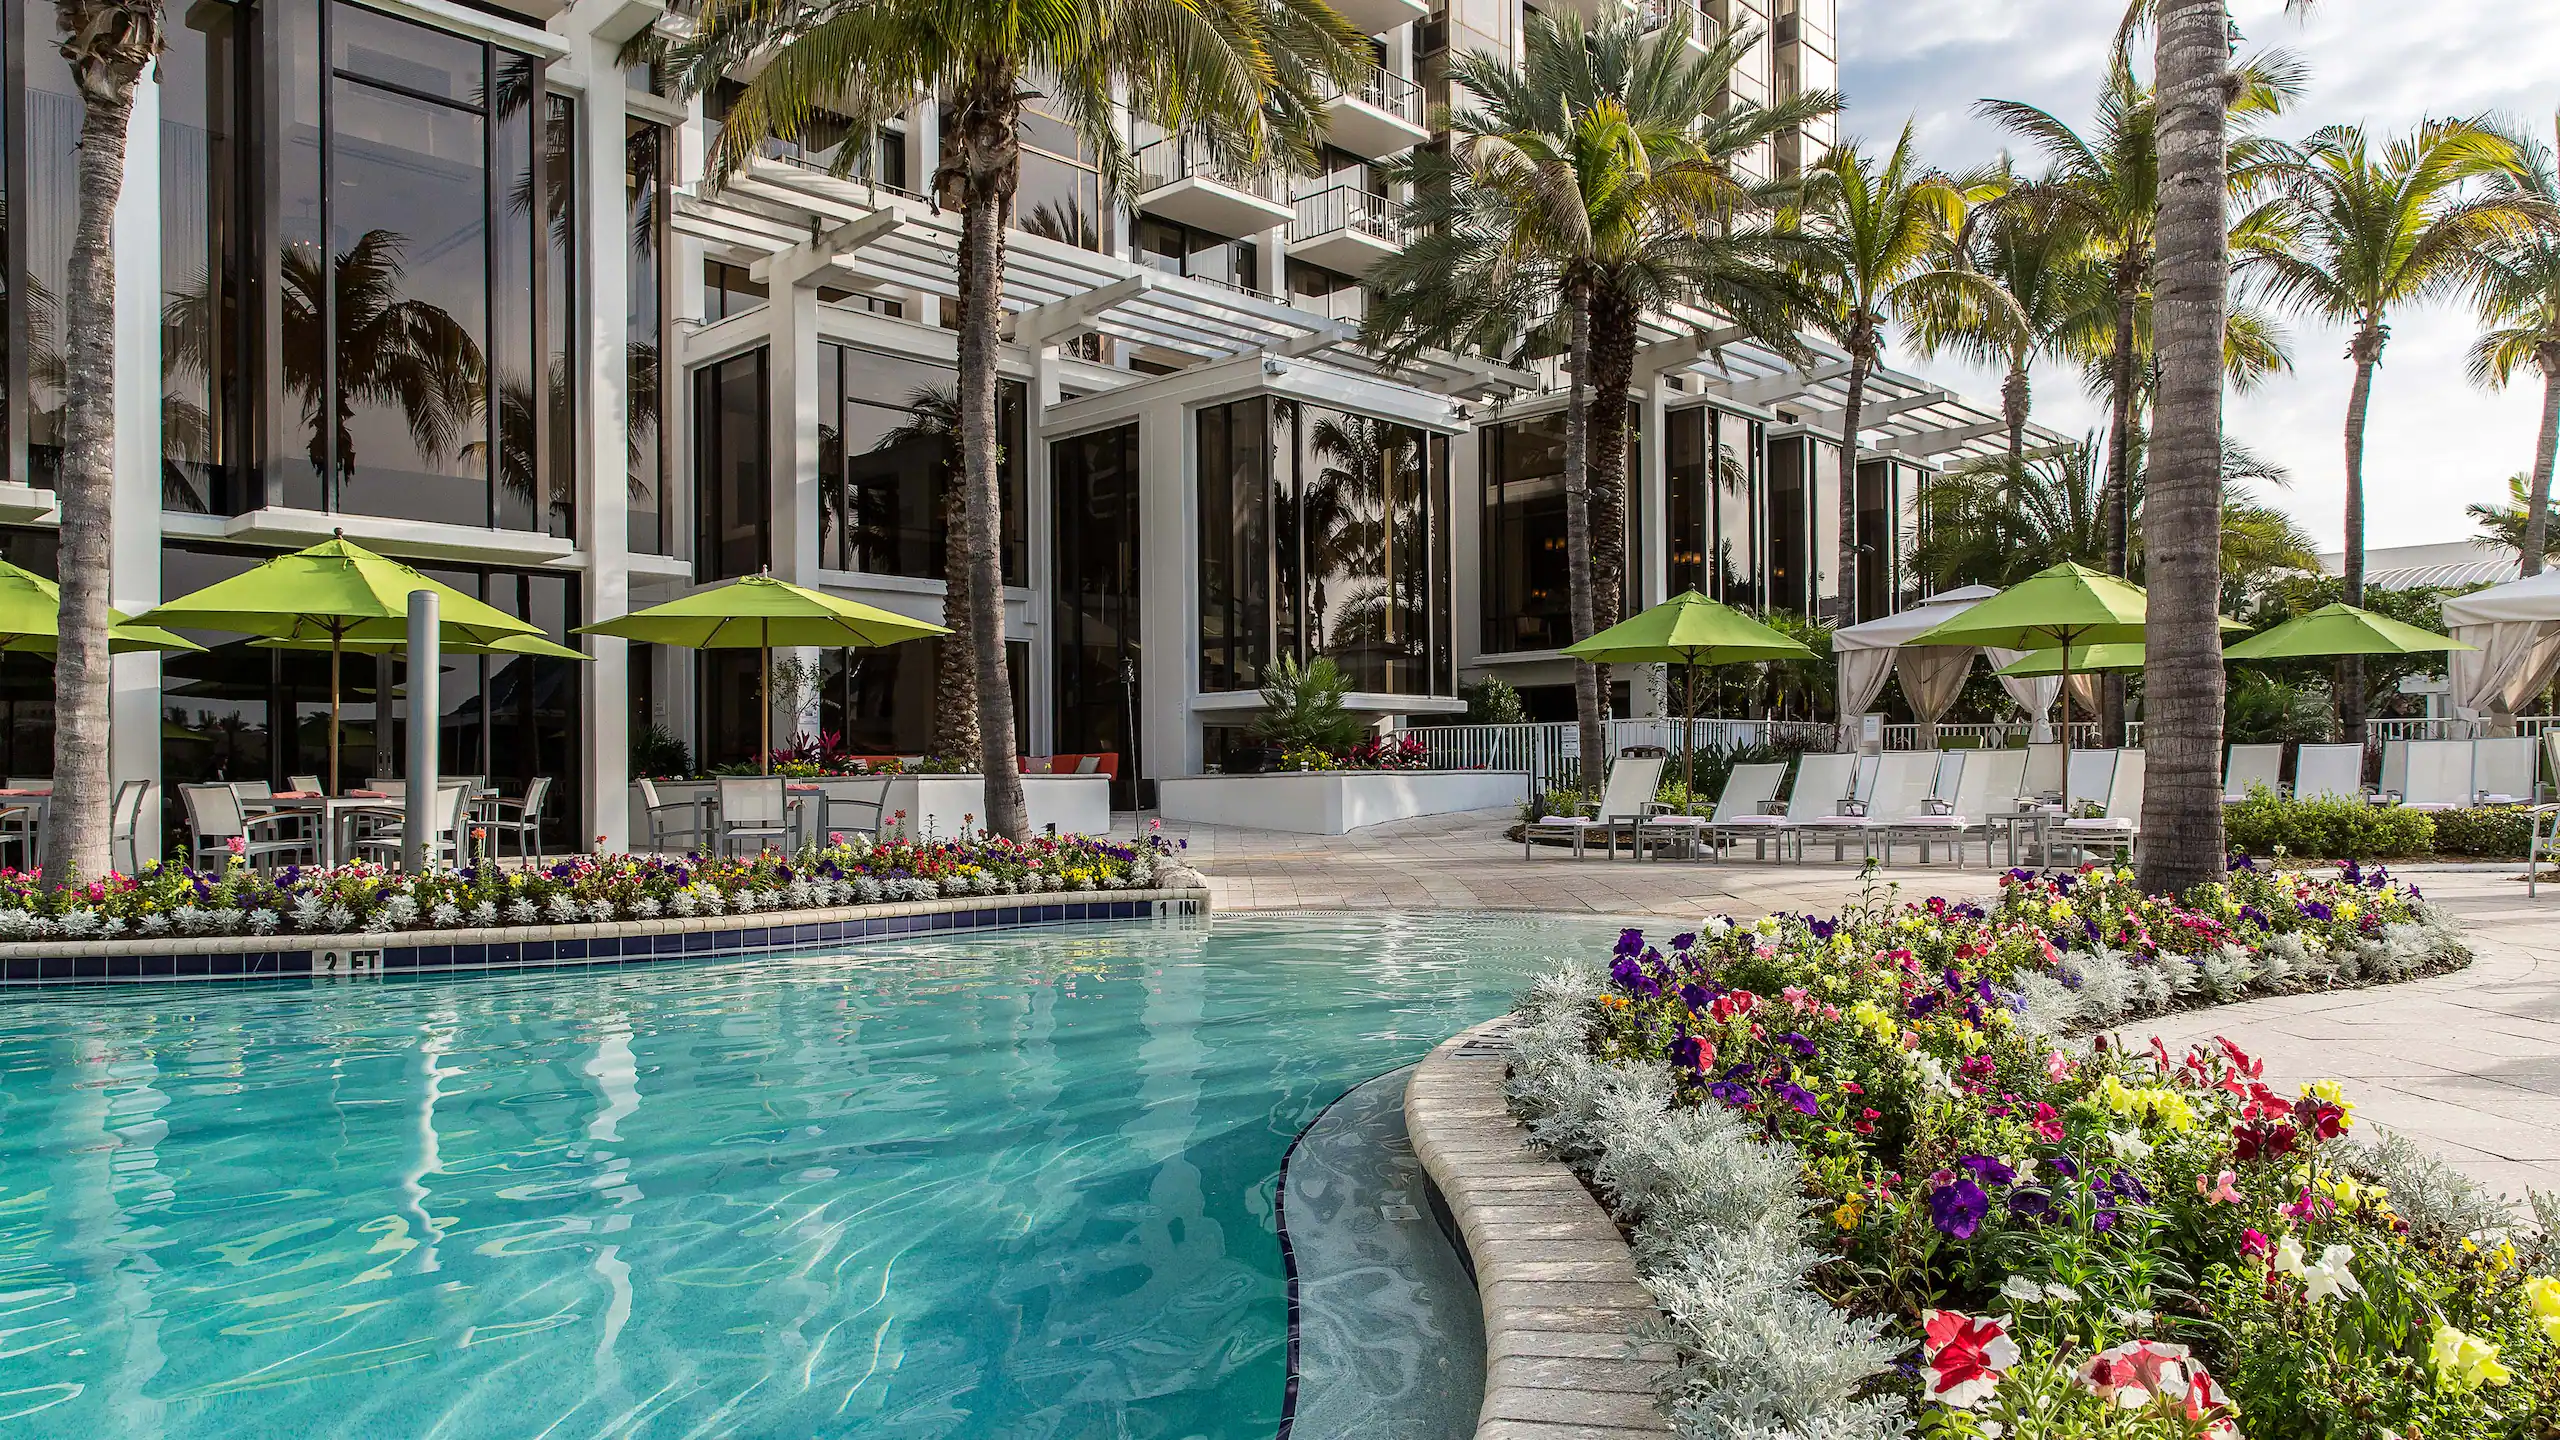 Top Hotel Options in Sarasota, FL